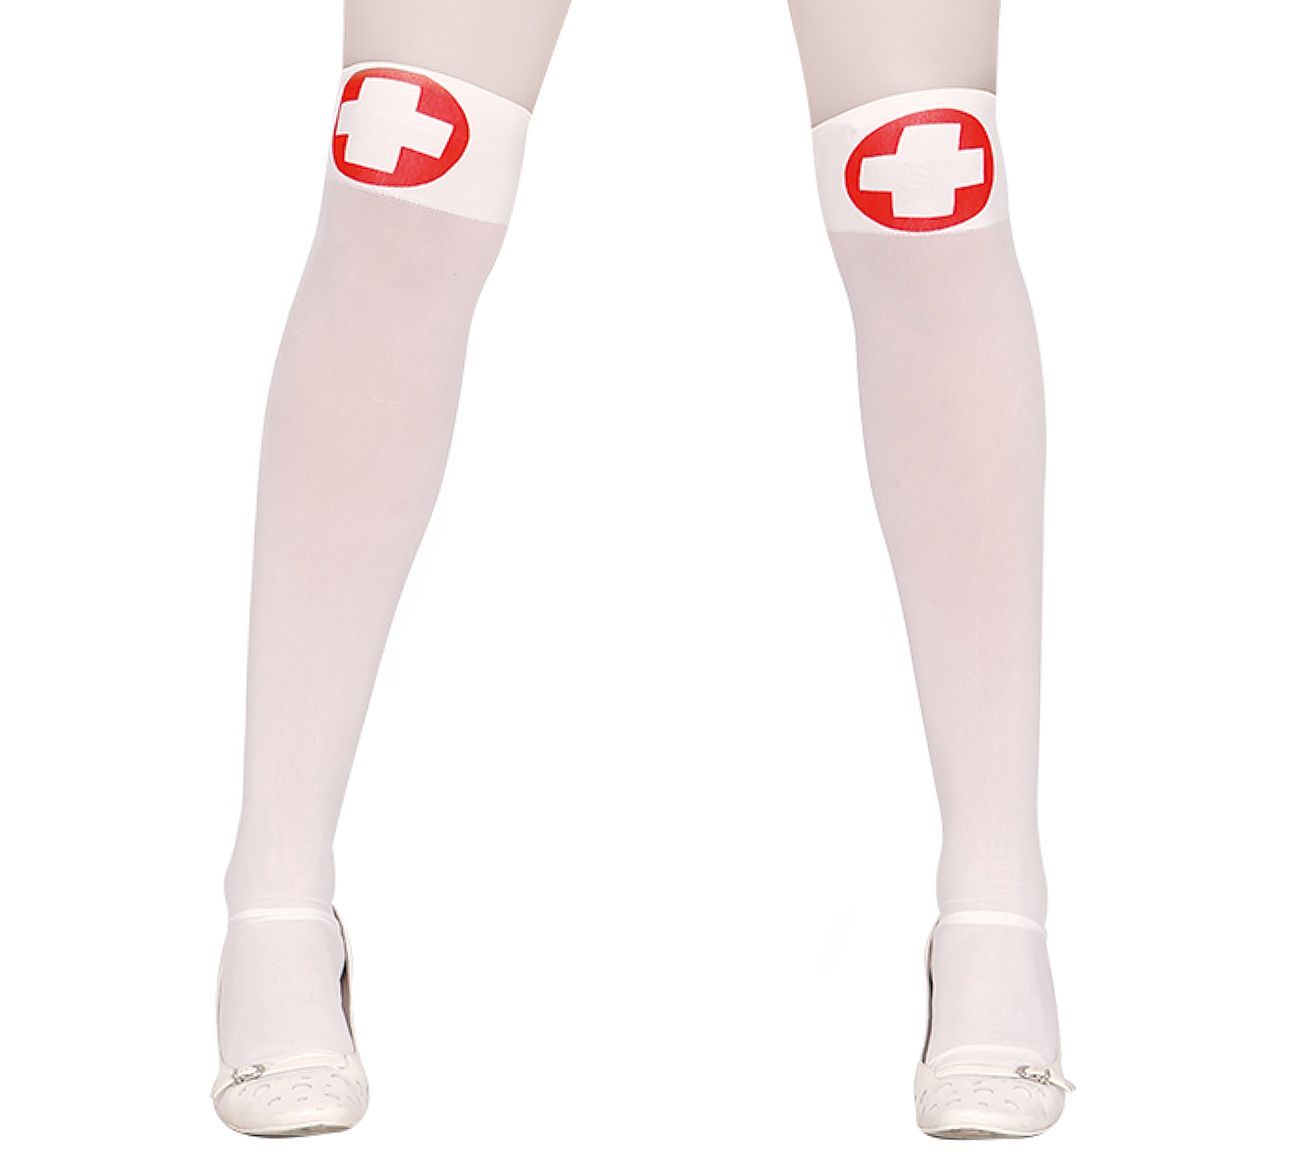 Hoge verpleegster sokken met rood kruis